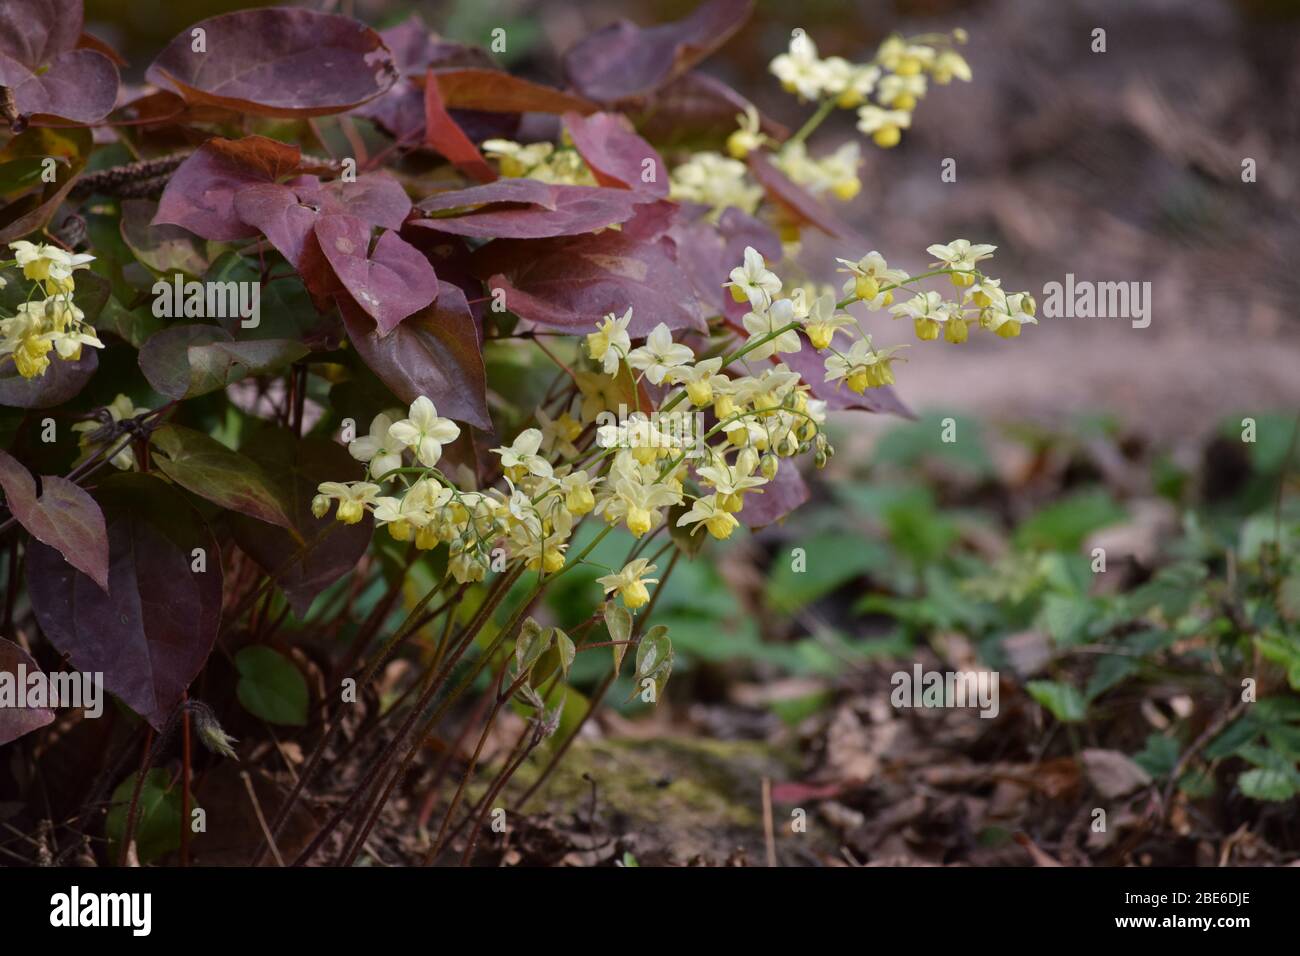 Barrenwort in an alpine Rock garden Stock Photo